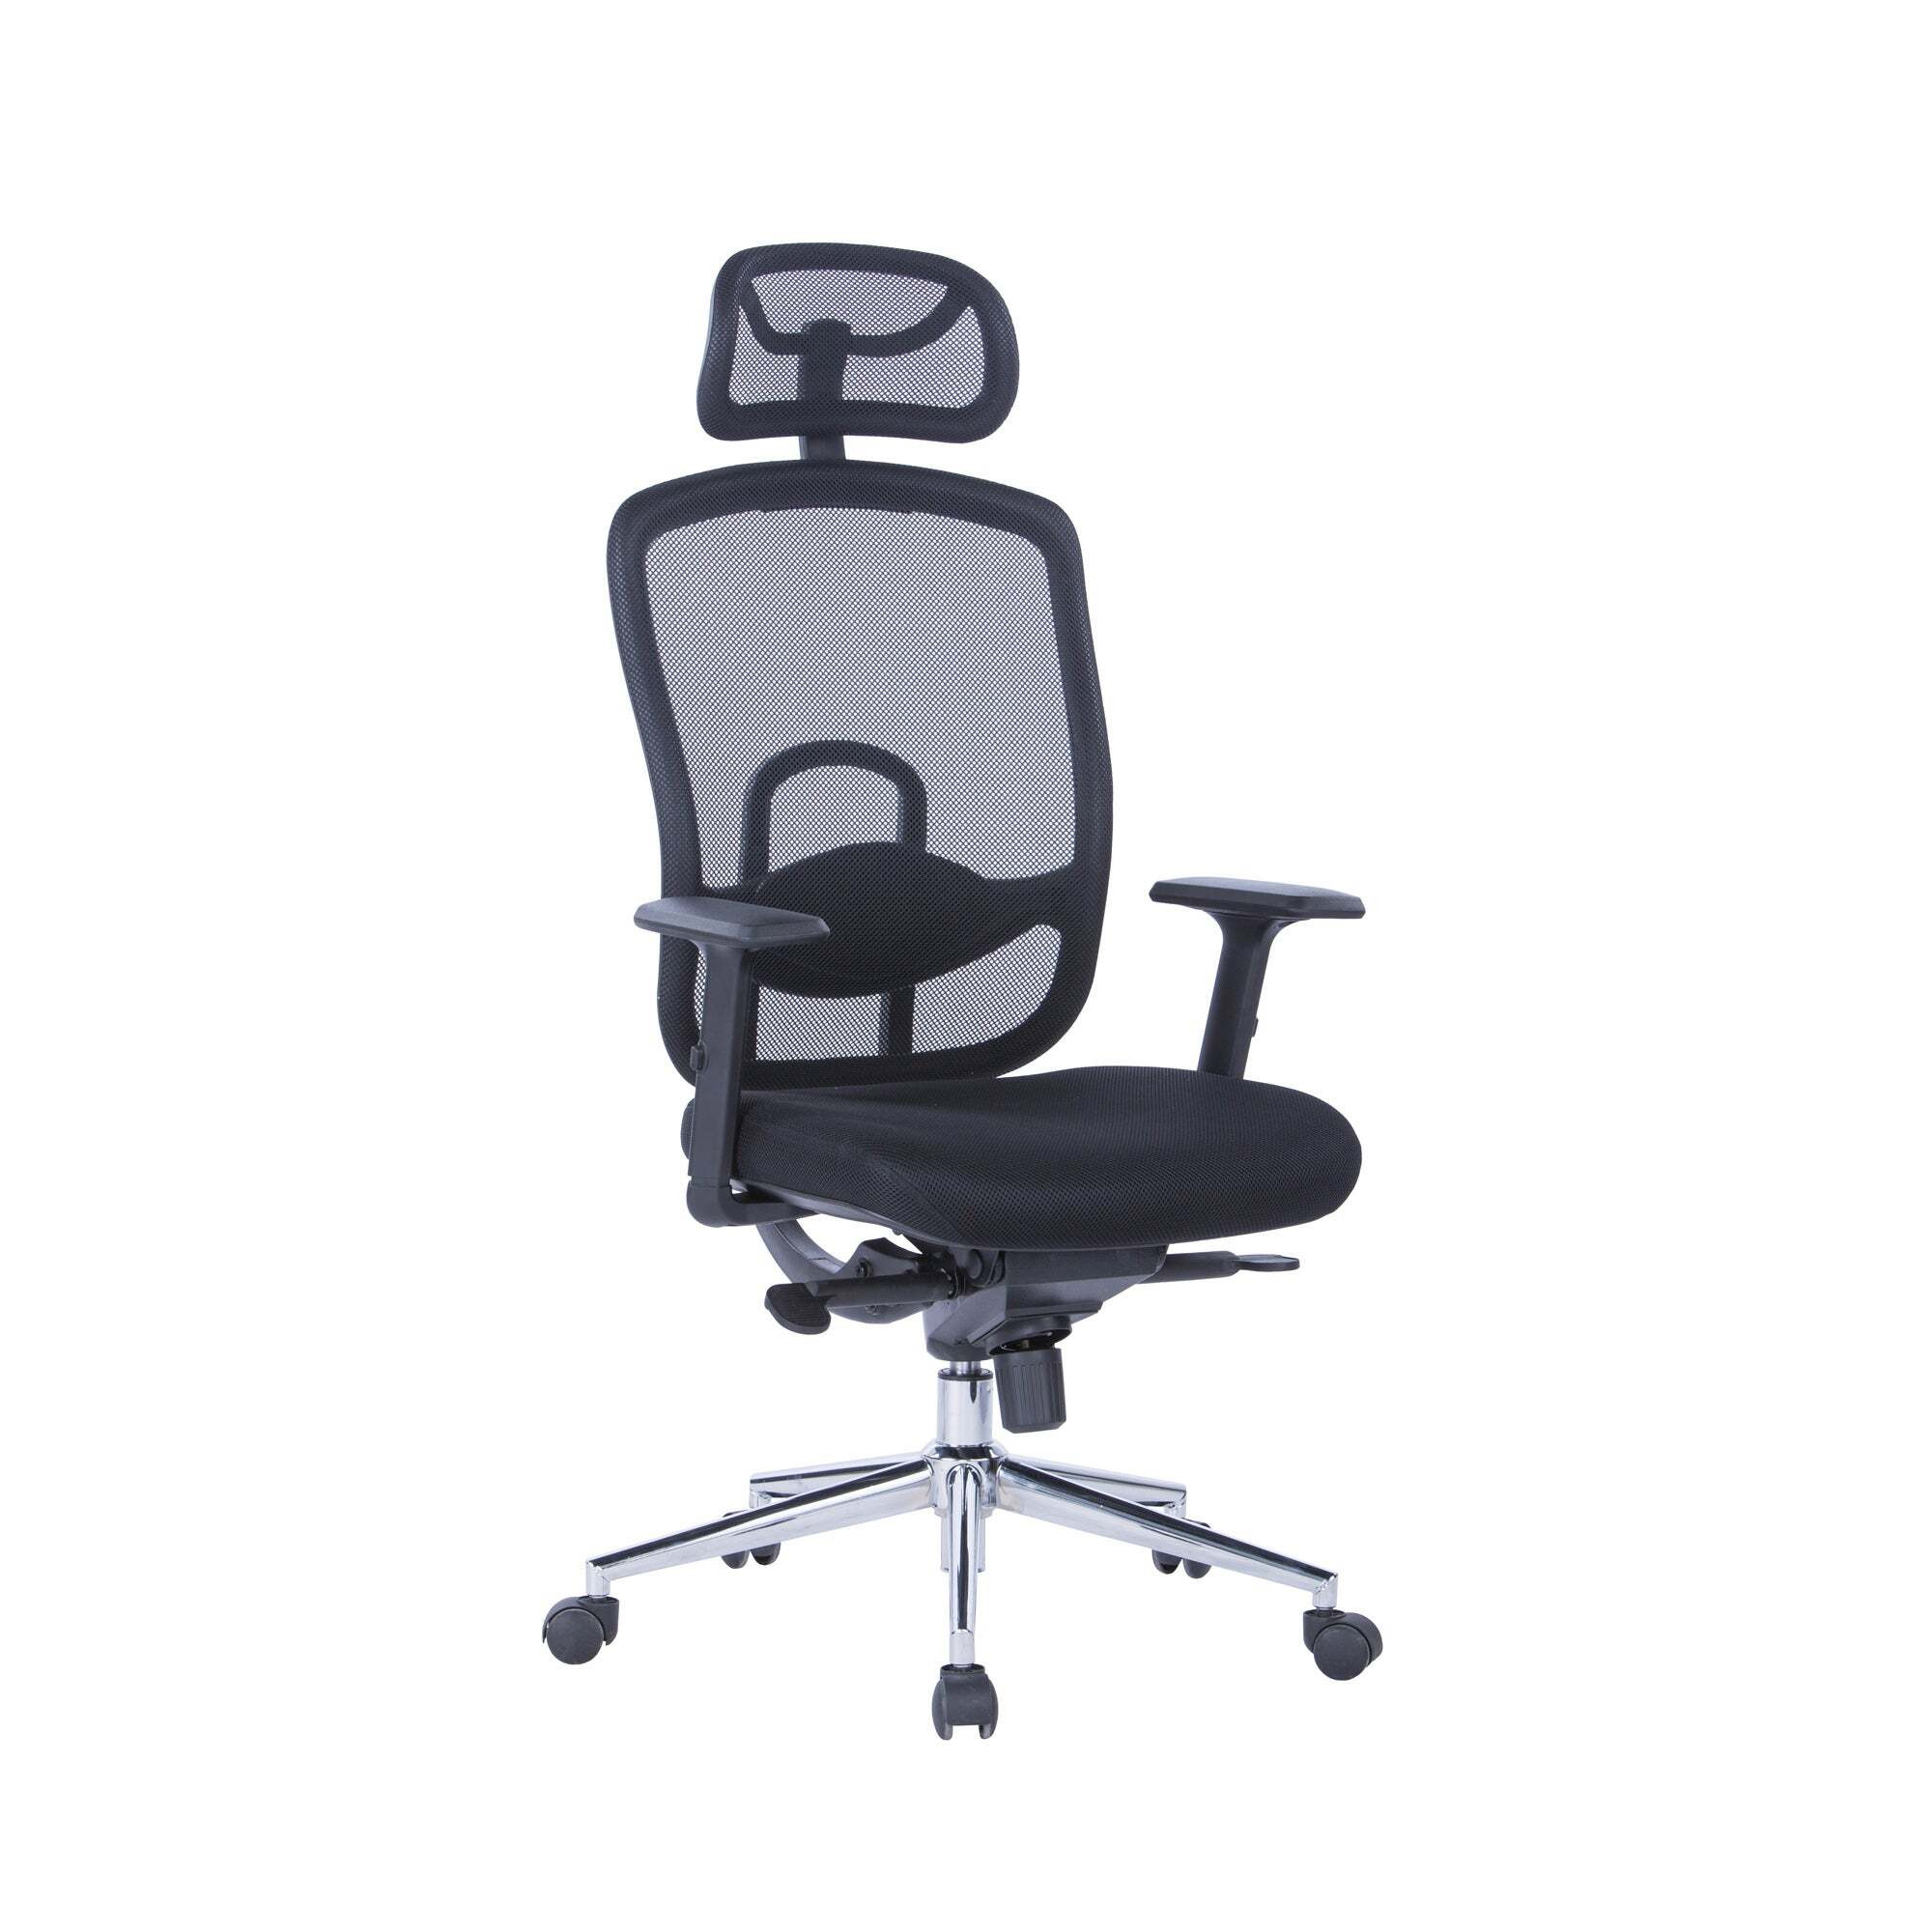 Miami Ergonomic Office Chair Black